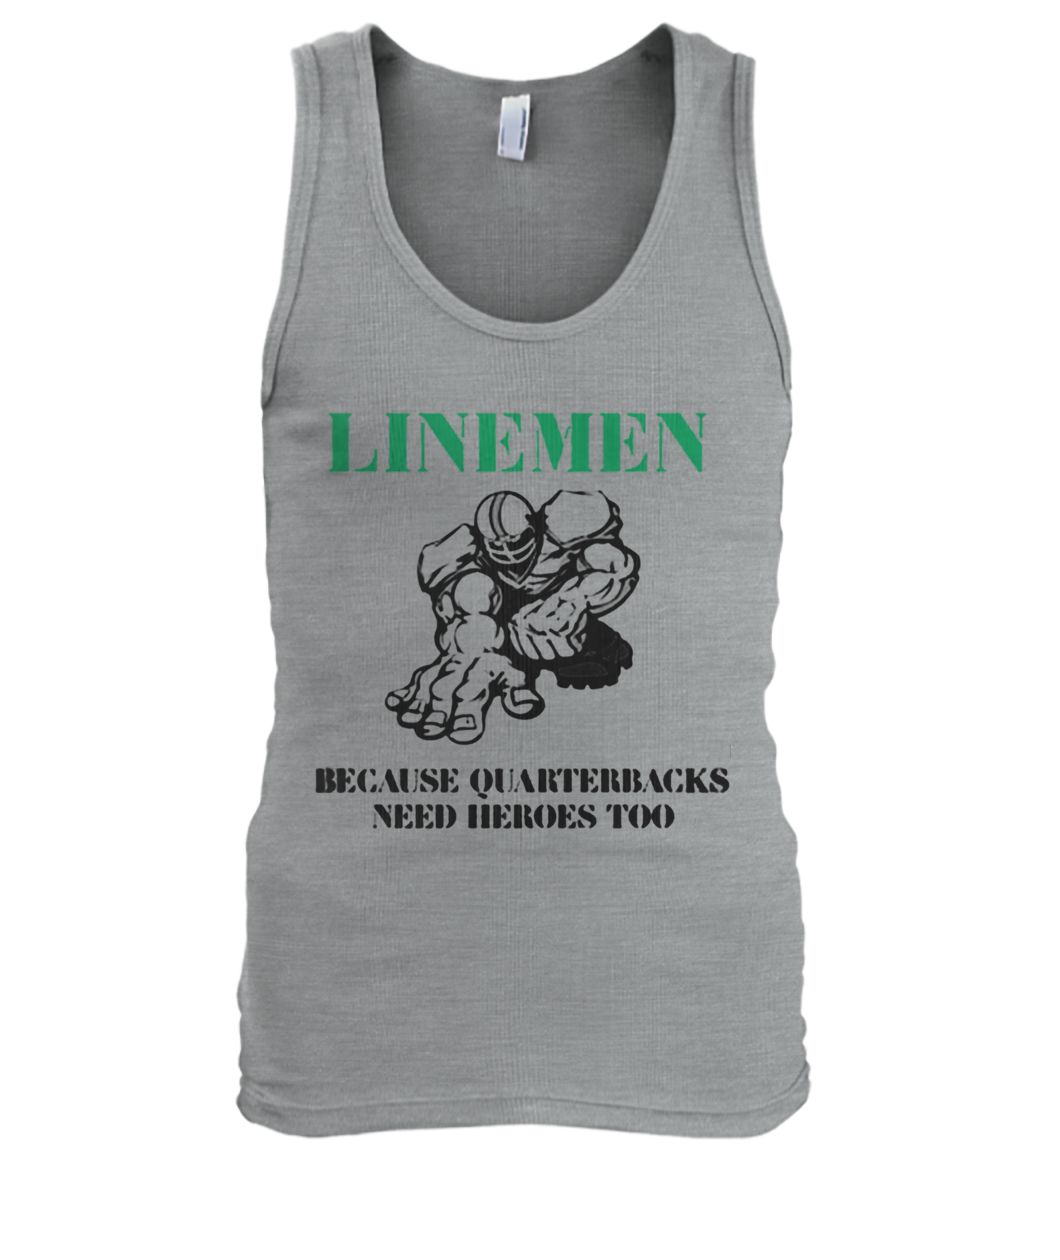 Linemen because quarterbacks need heroes too men's tank top